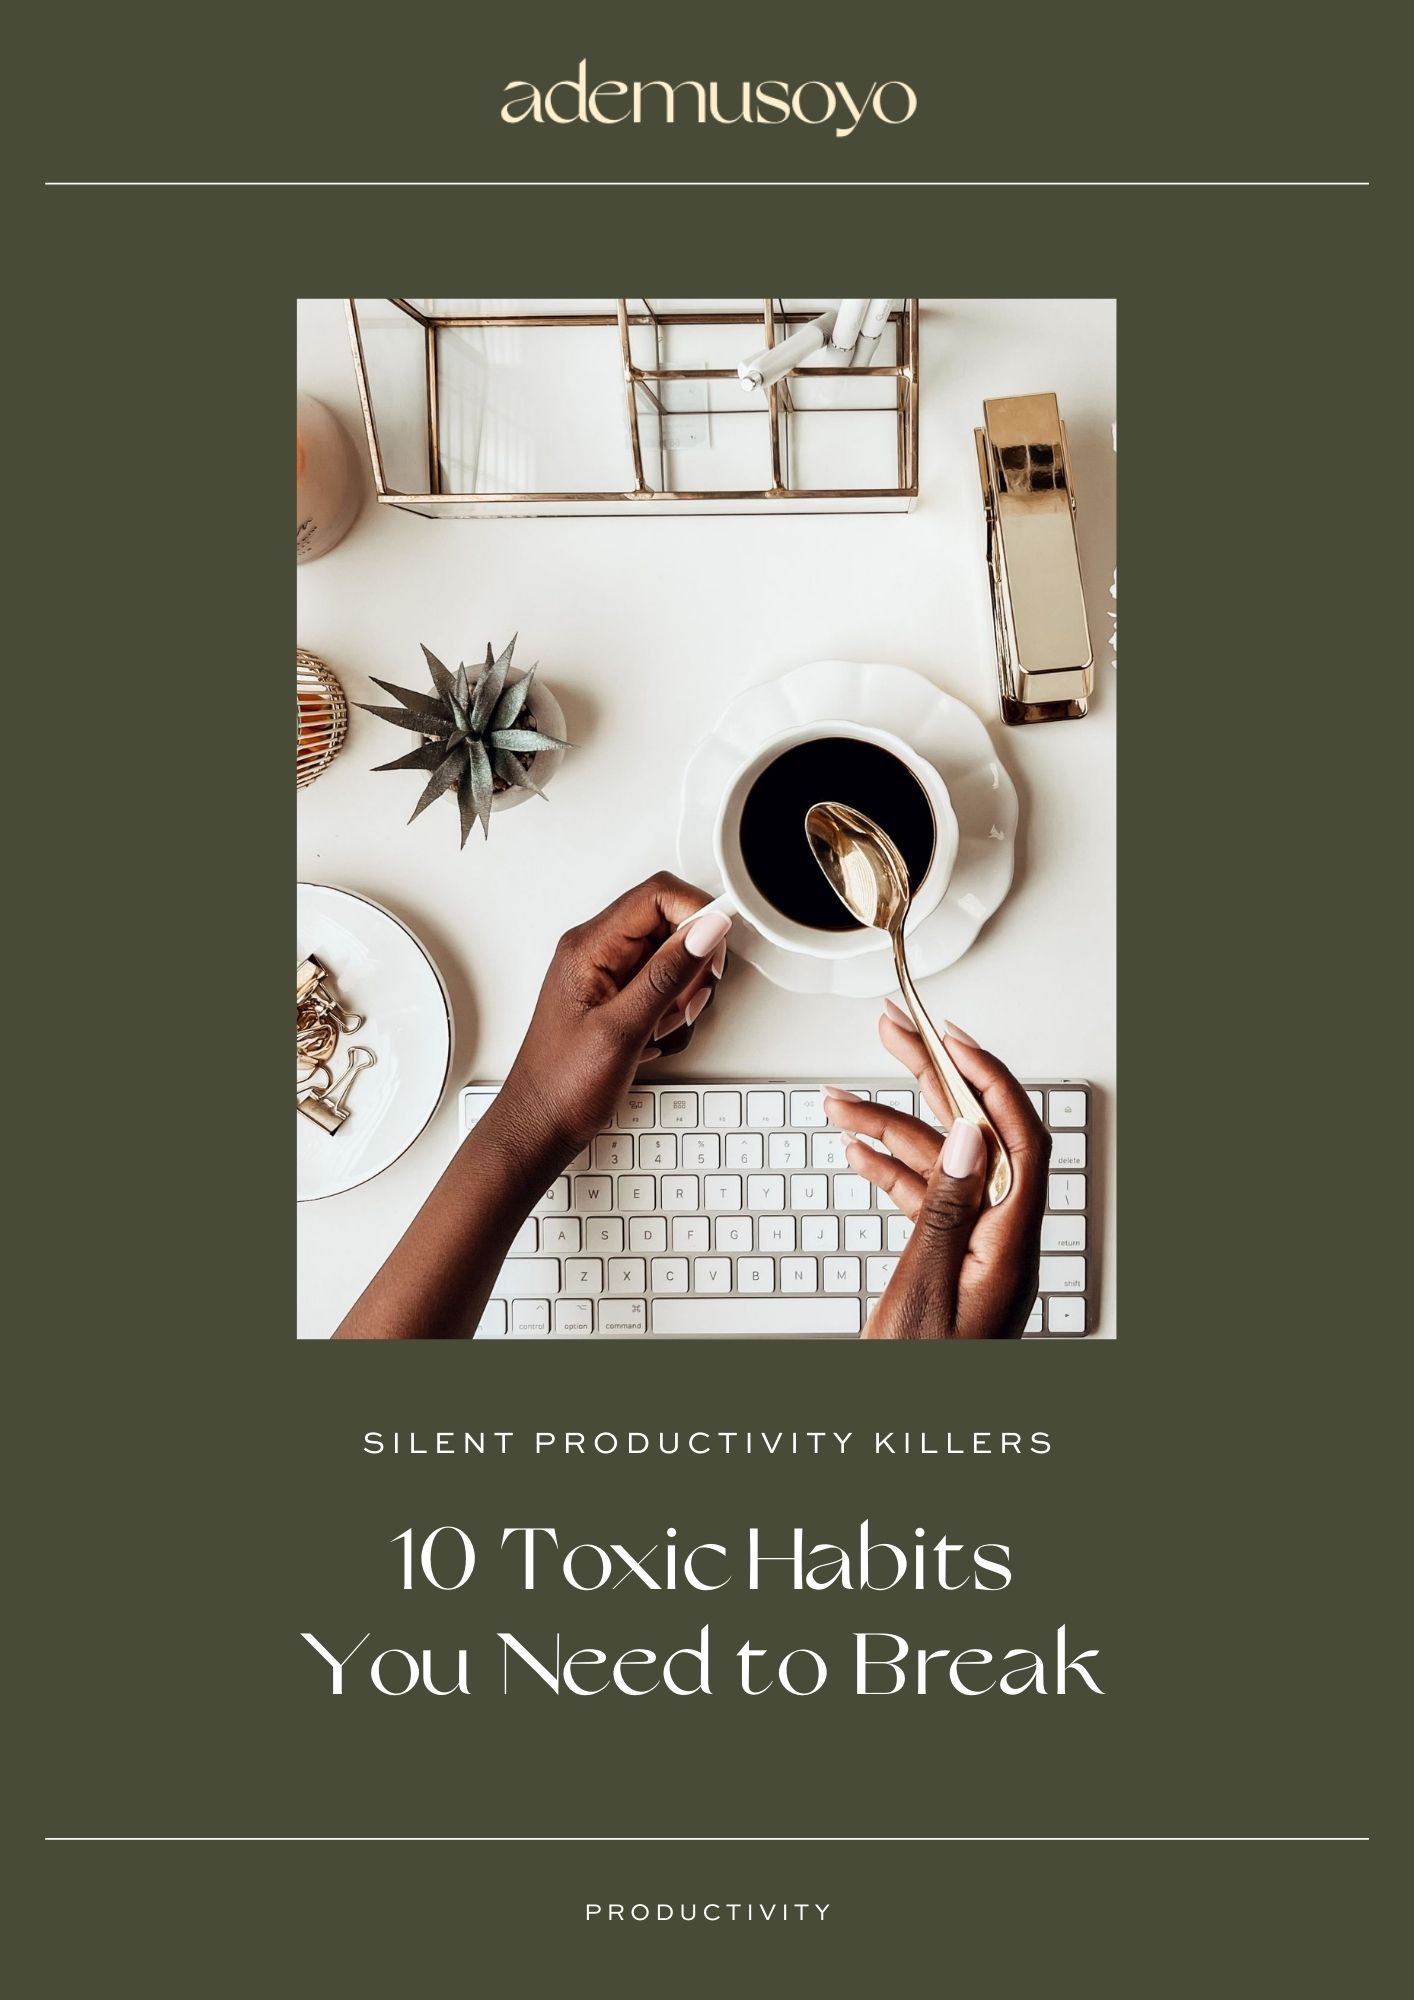 Silent Productivity Killers: 10 Toxic Habits You Need to Break